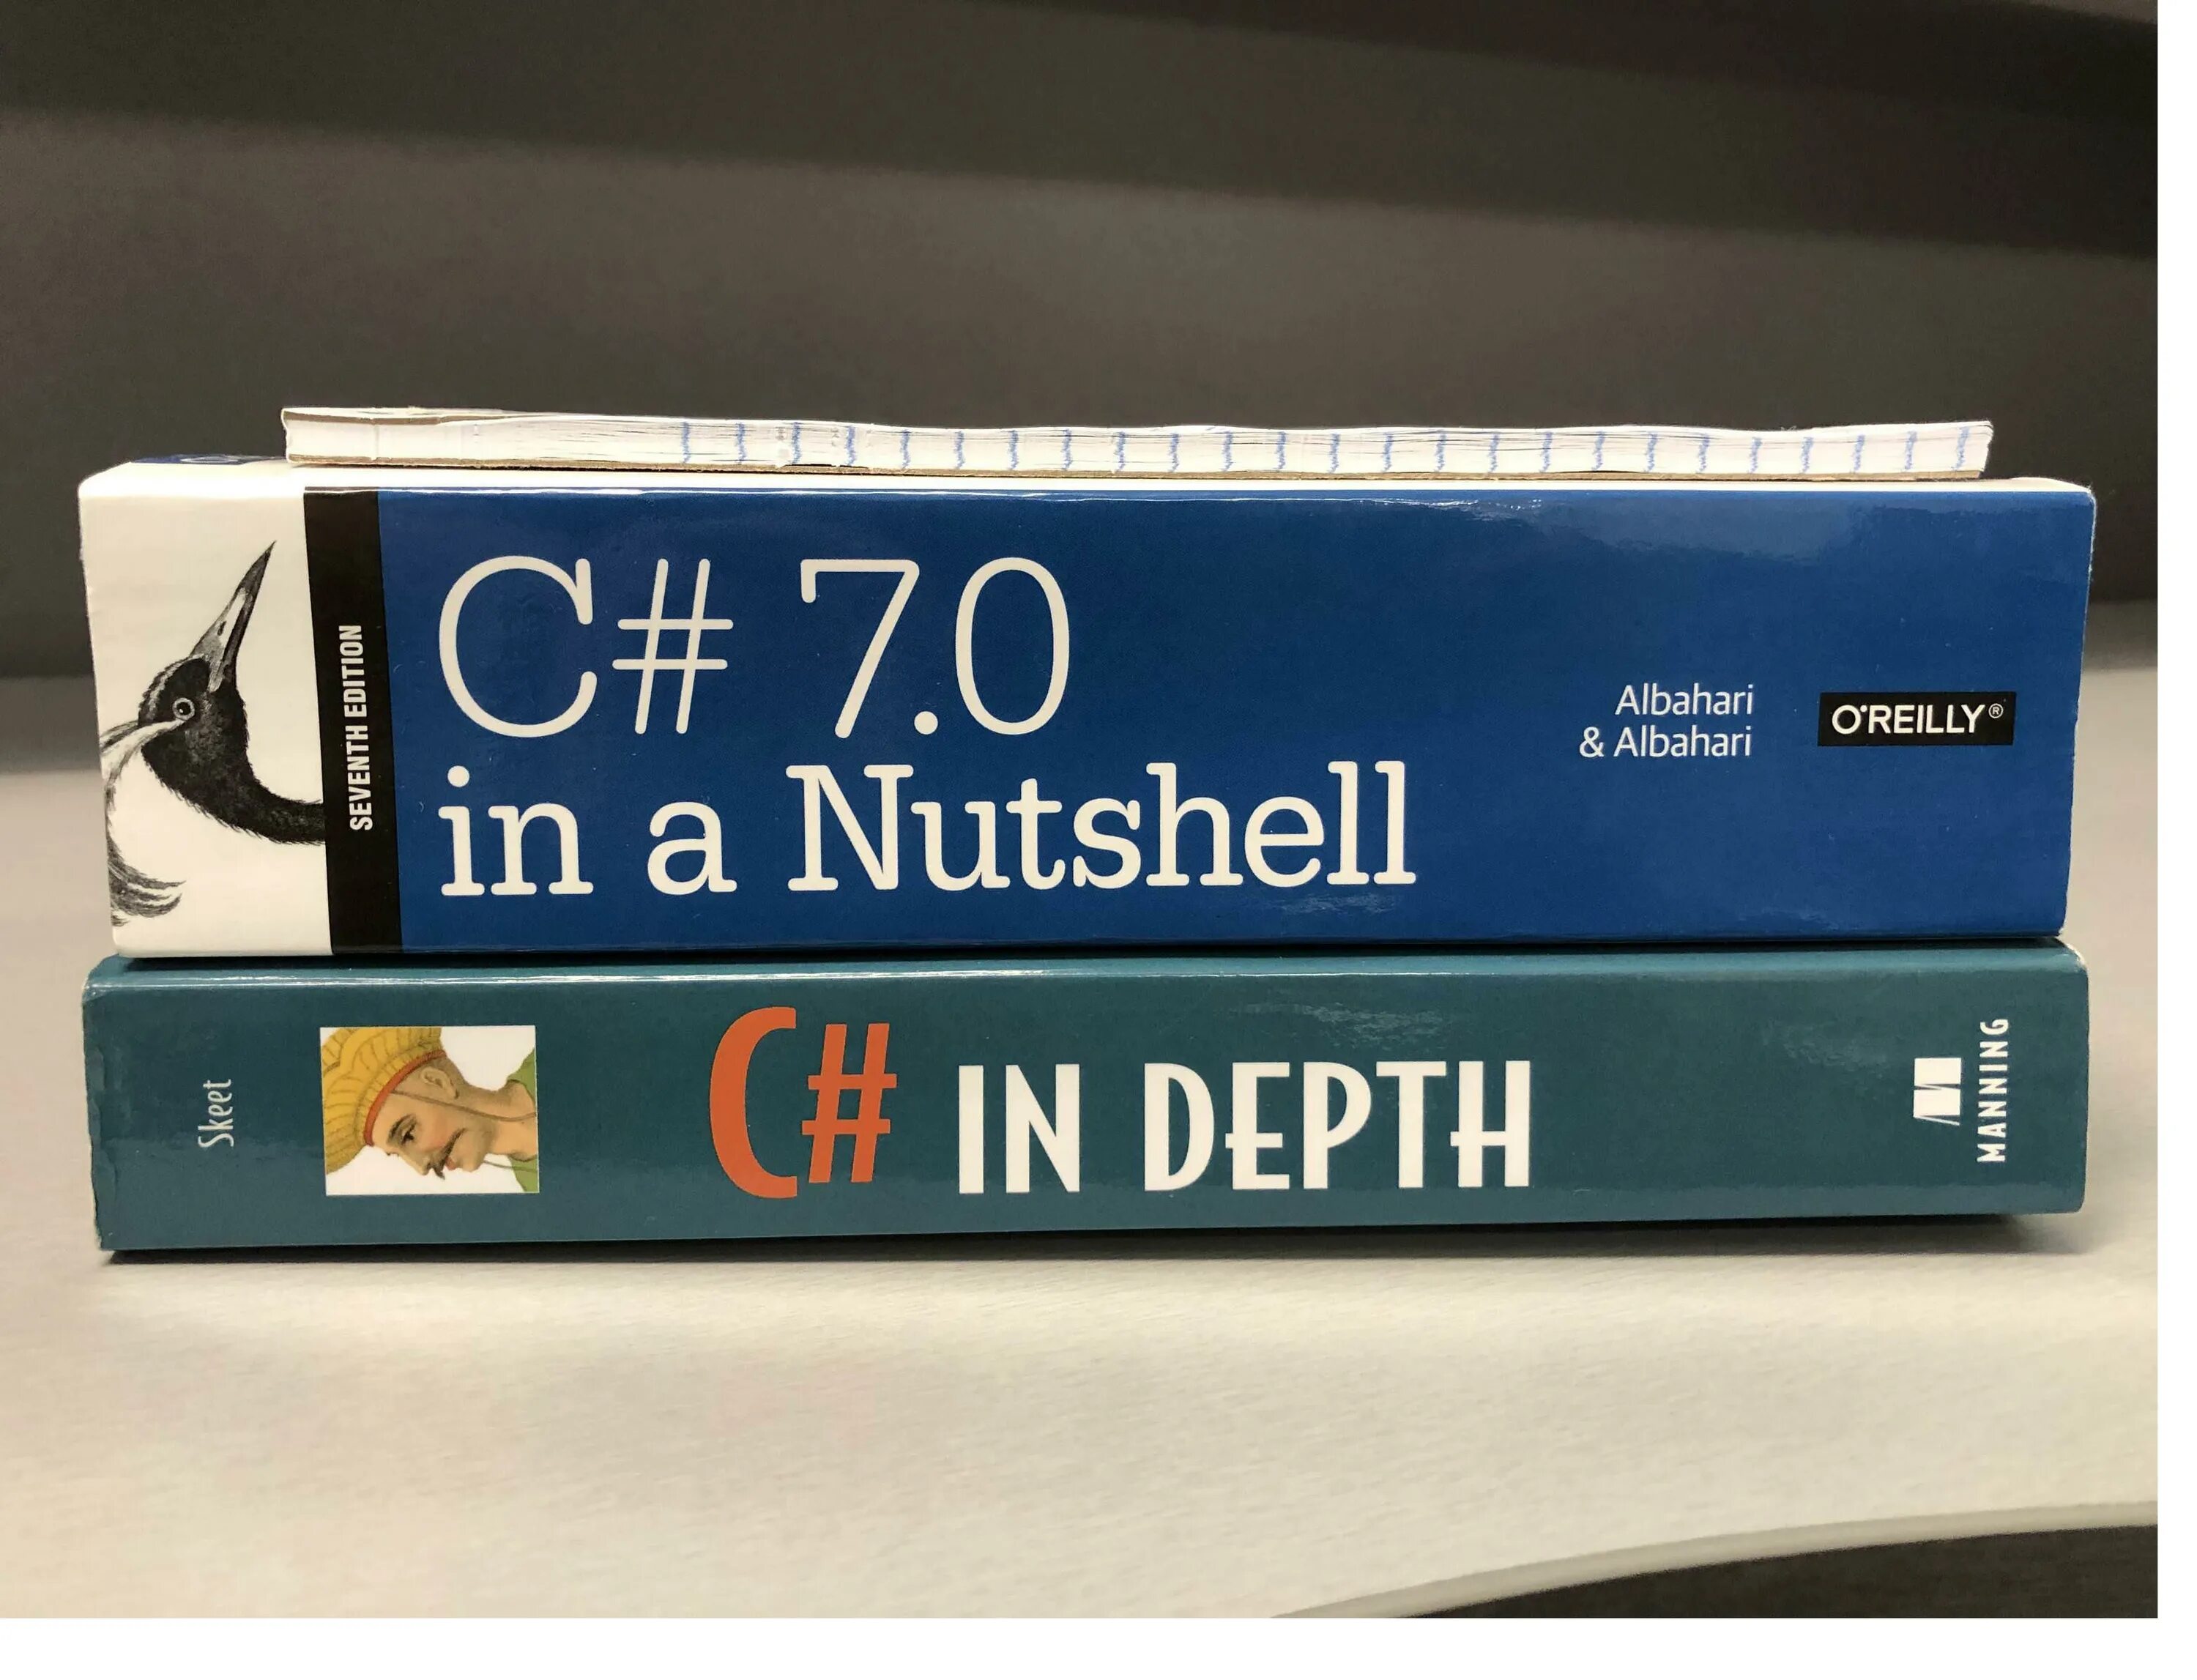 In Nutshell книга. Nutshell c++ книга. C# in a Nutshell. C# 10 in a Nutshell. Good books for c